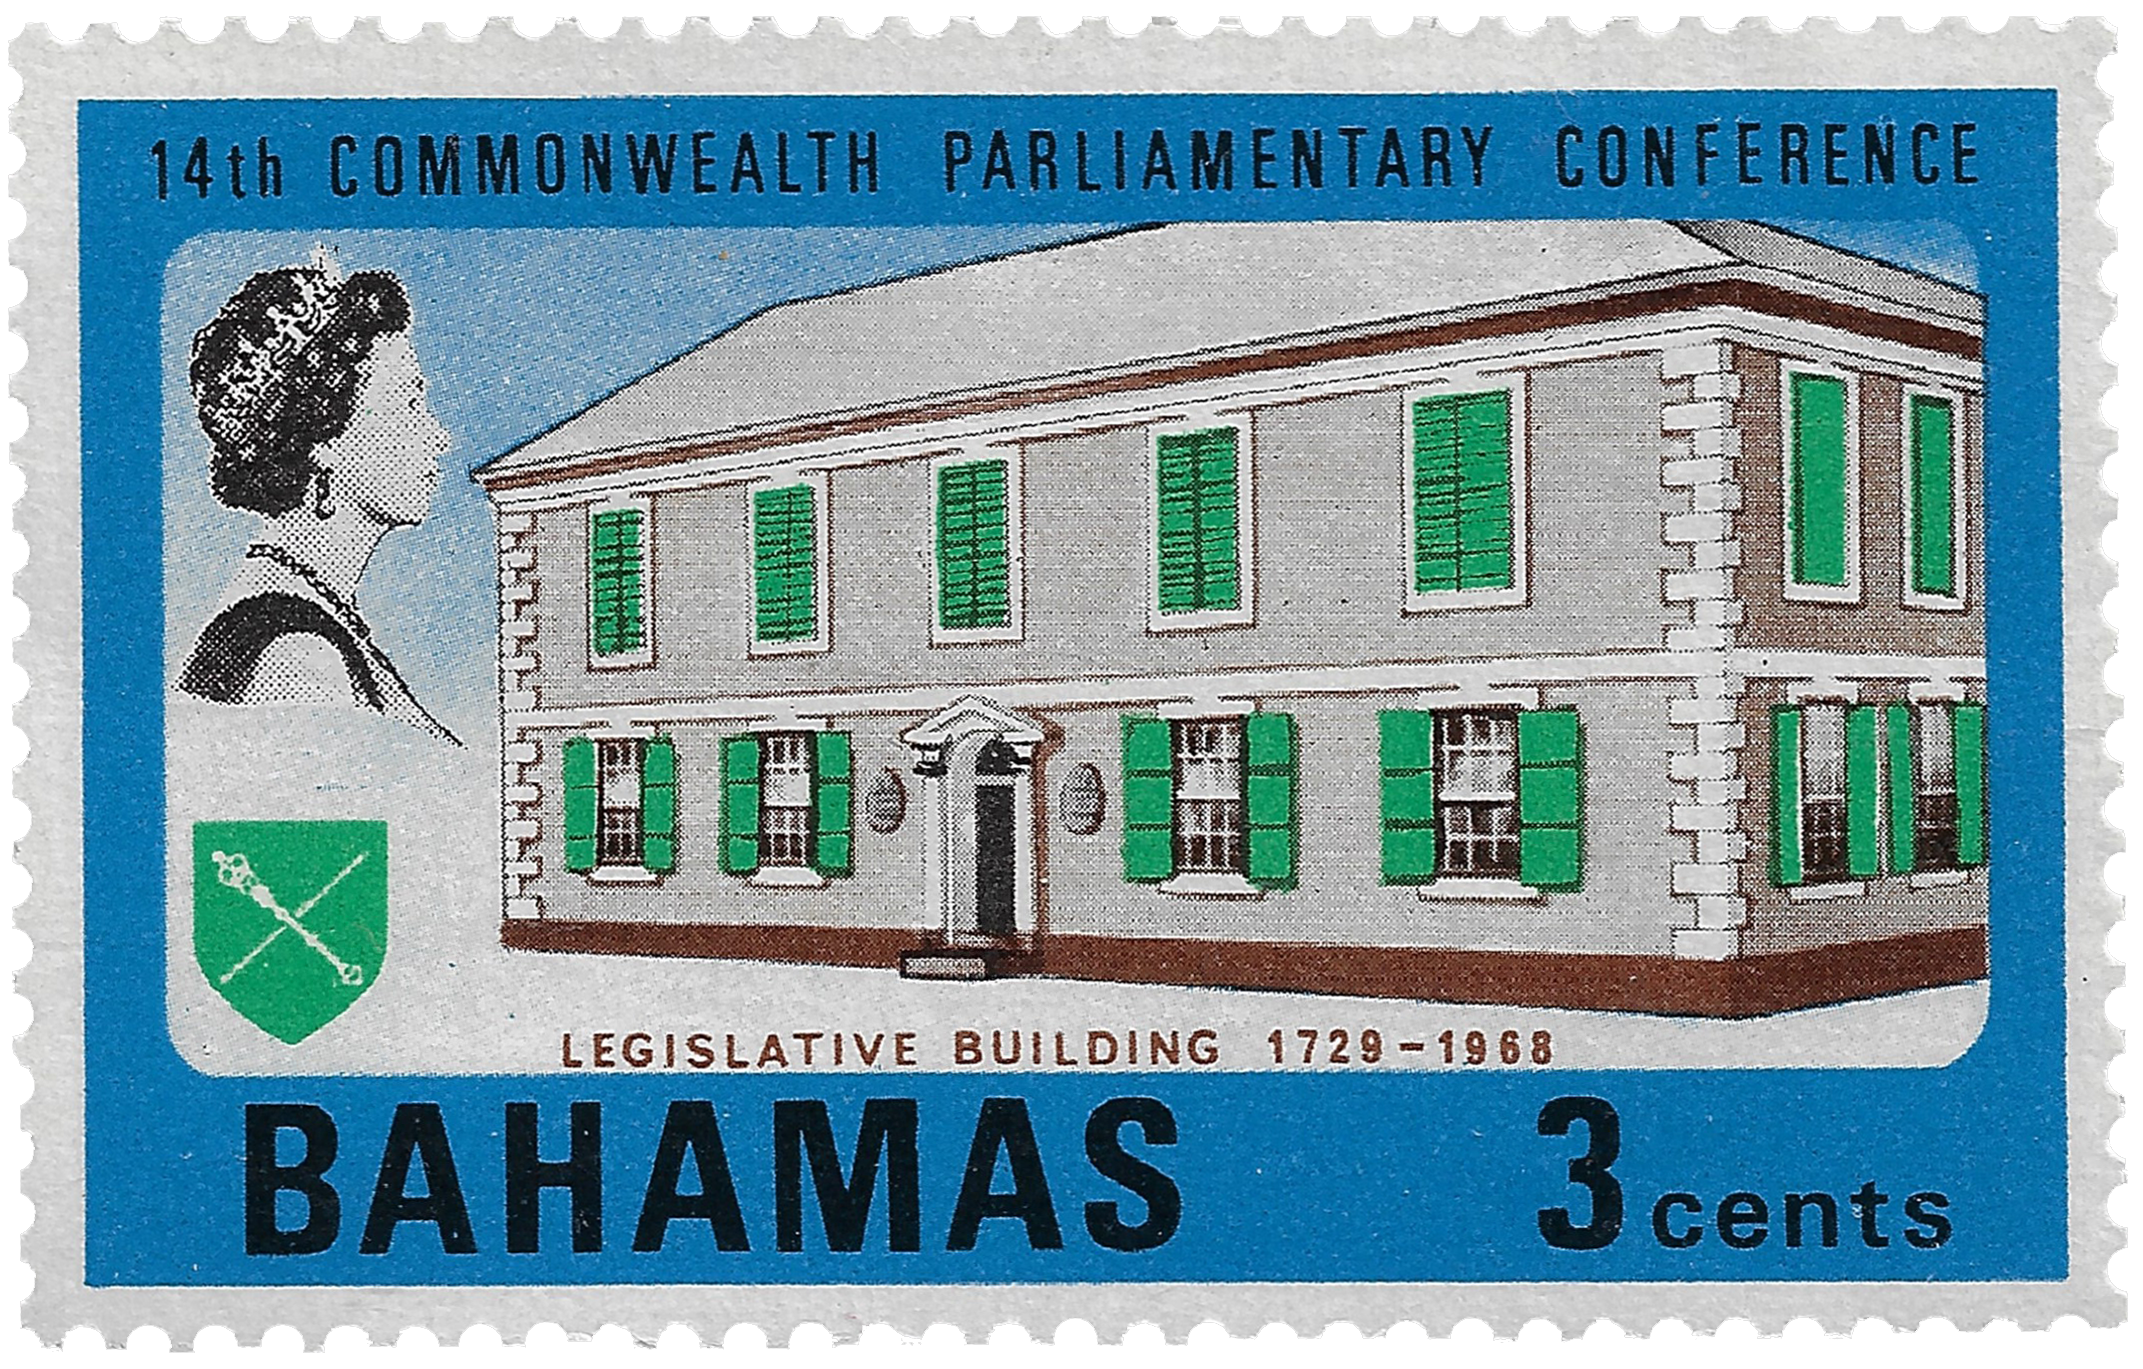 3c 1968, Fourteenth Commonwealth Parliamentary Conference, Legislative Building 1729-1968